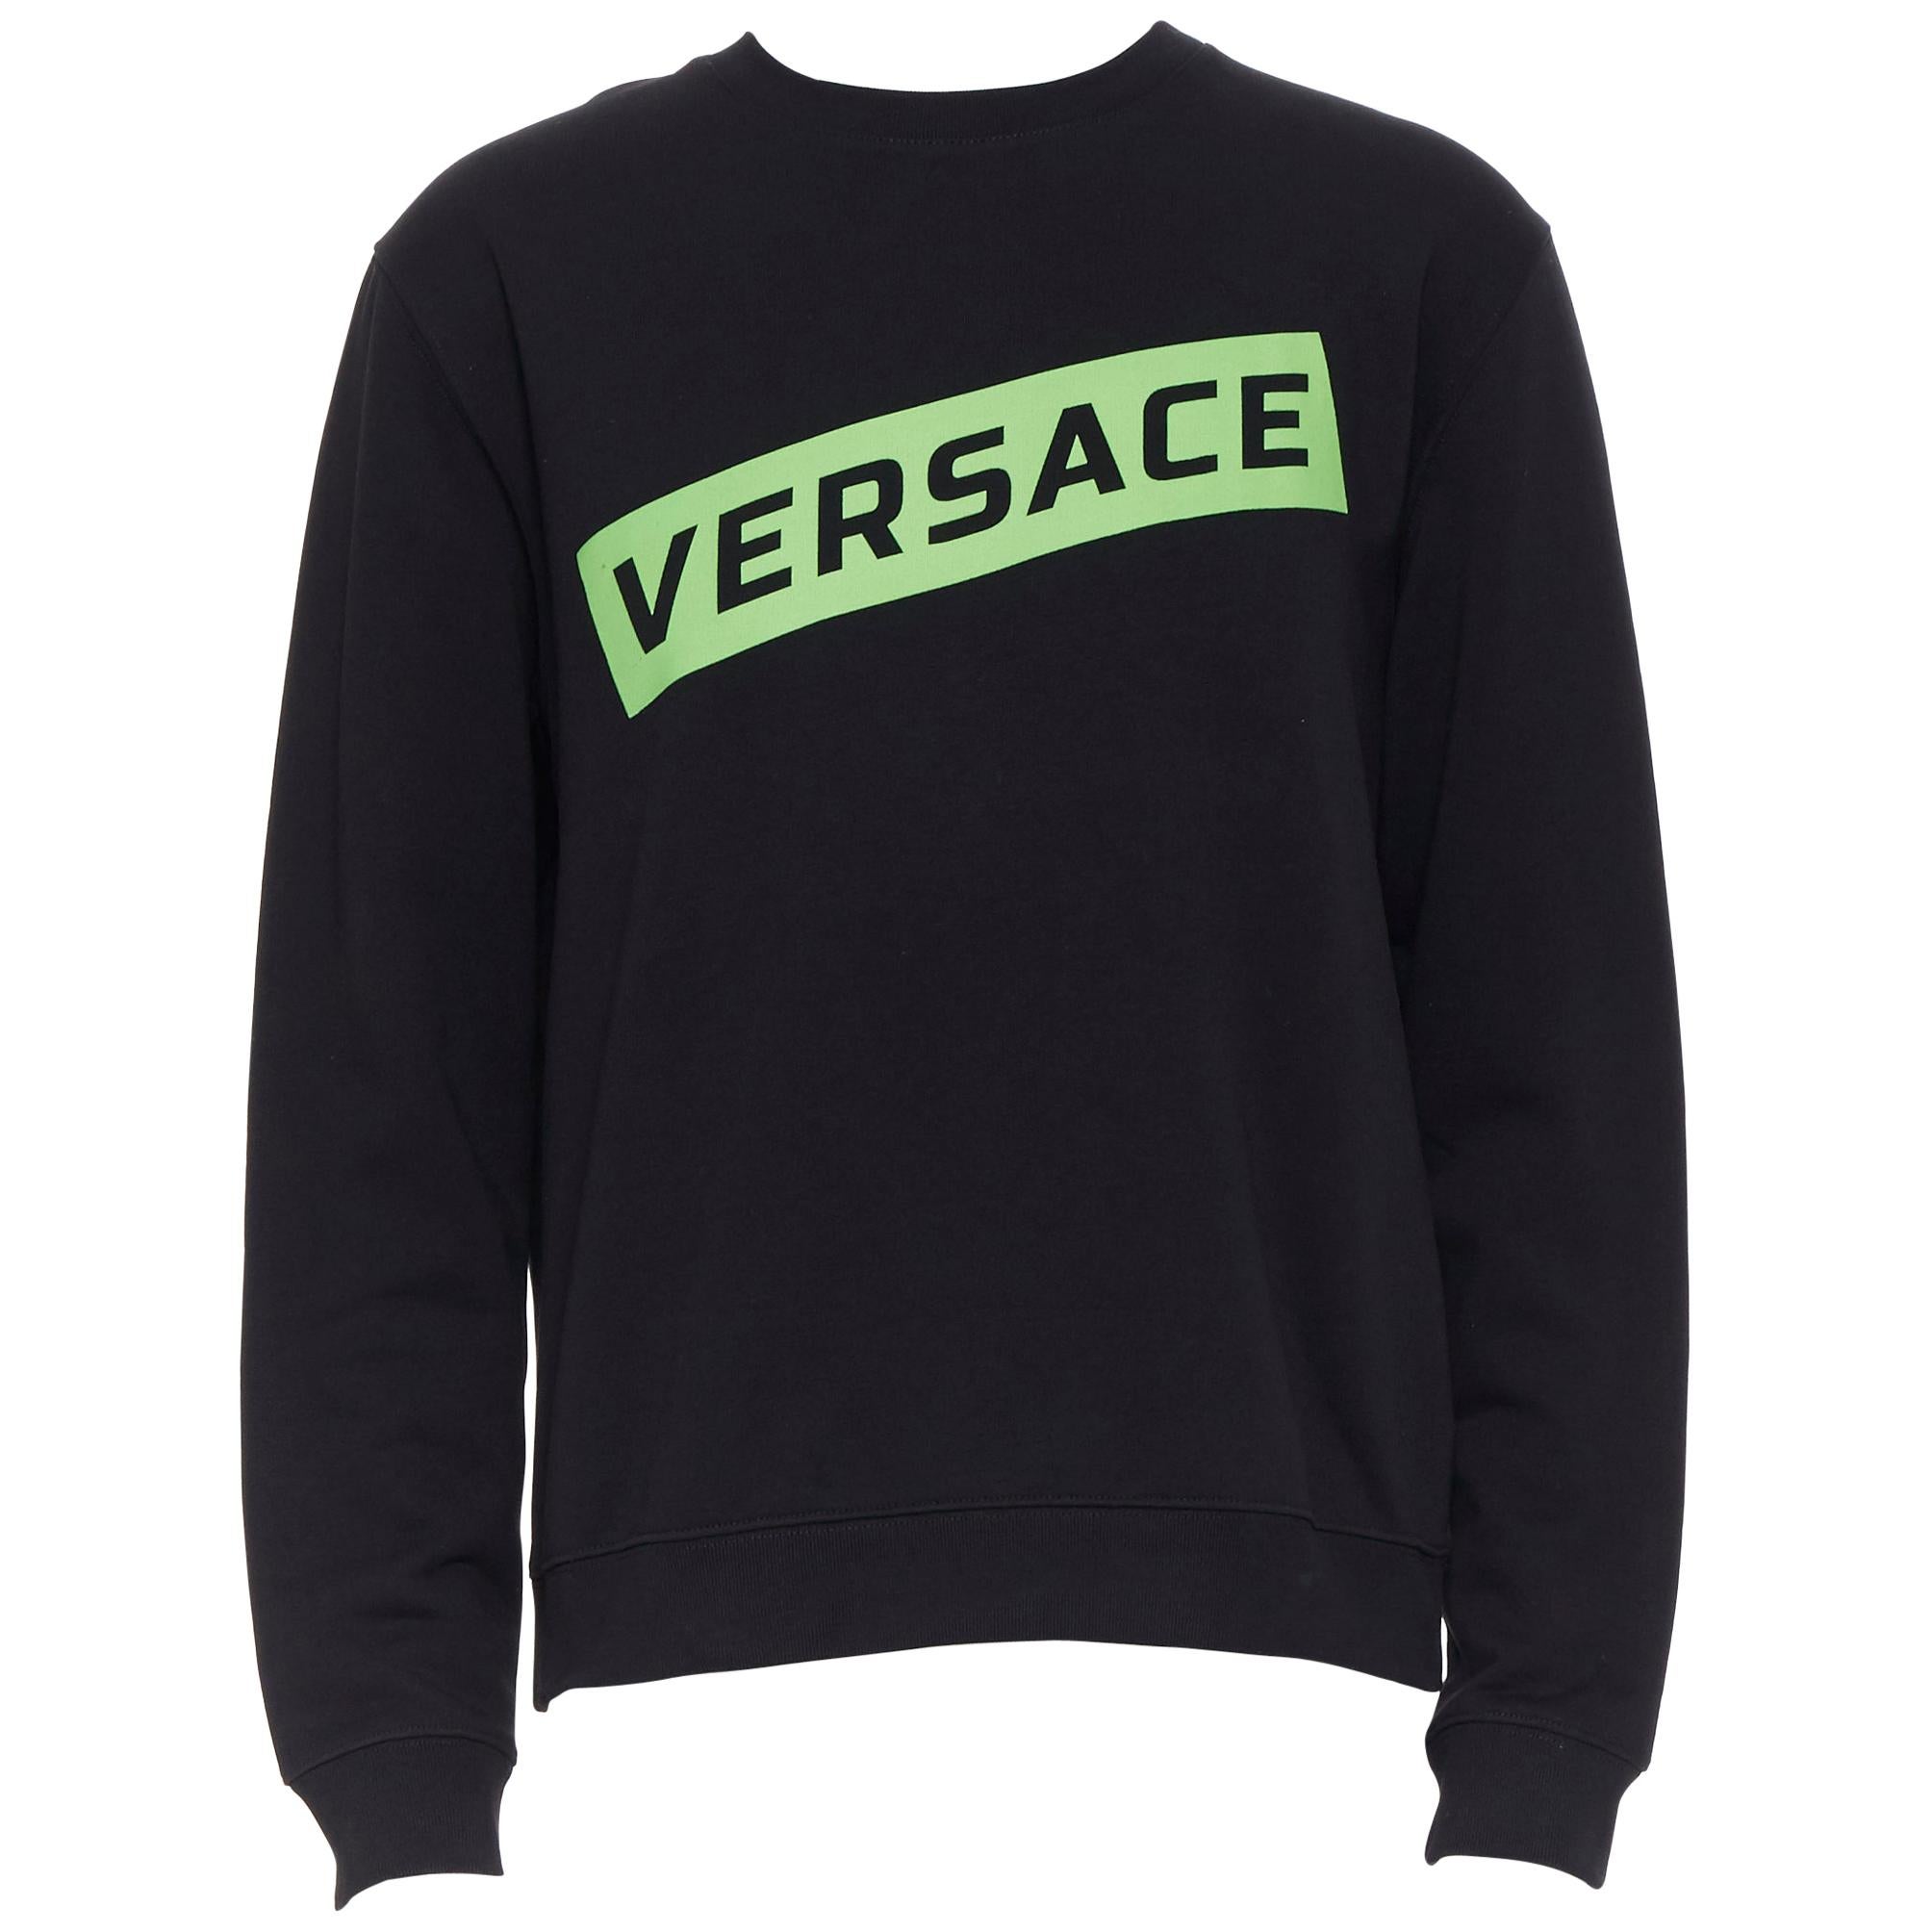 new VERSACE 2019 black cotton green box logo graphic crewneck pullover sweats XL